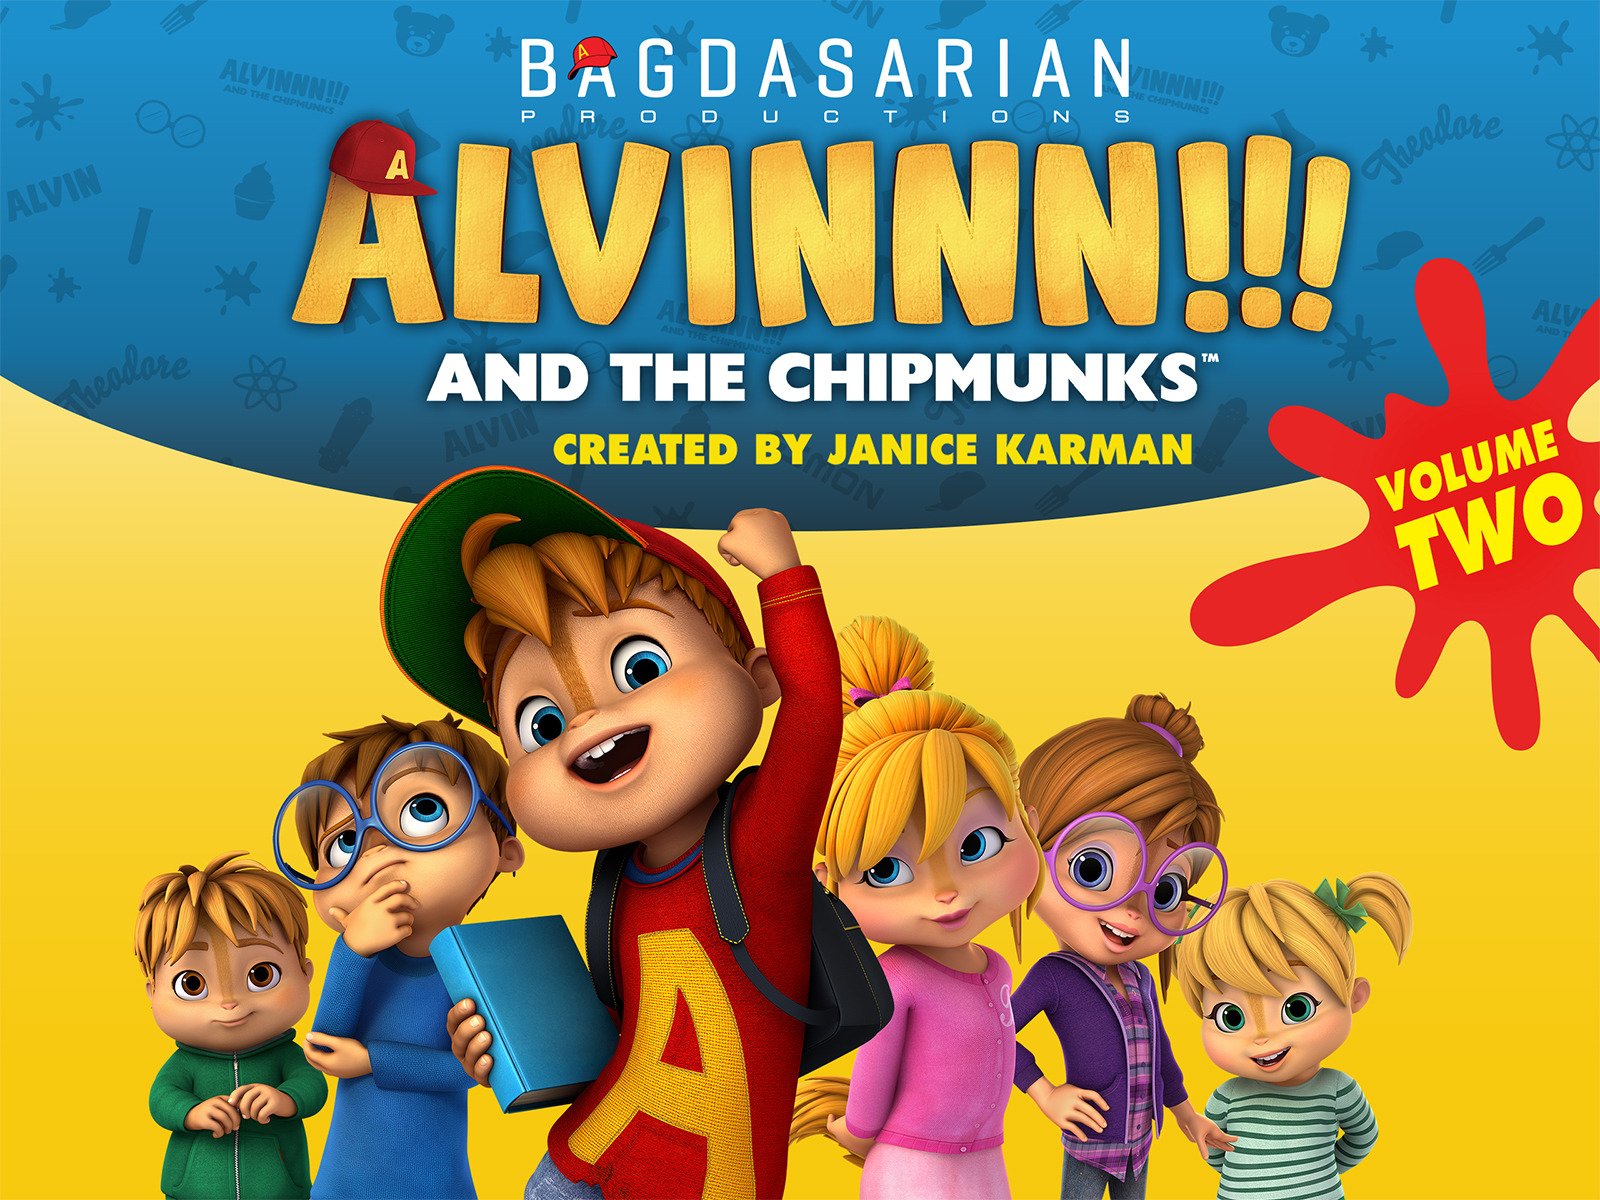 Flash Drive Alvinnn!!! and the Chipmunks Season 2